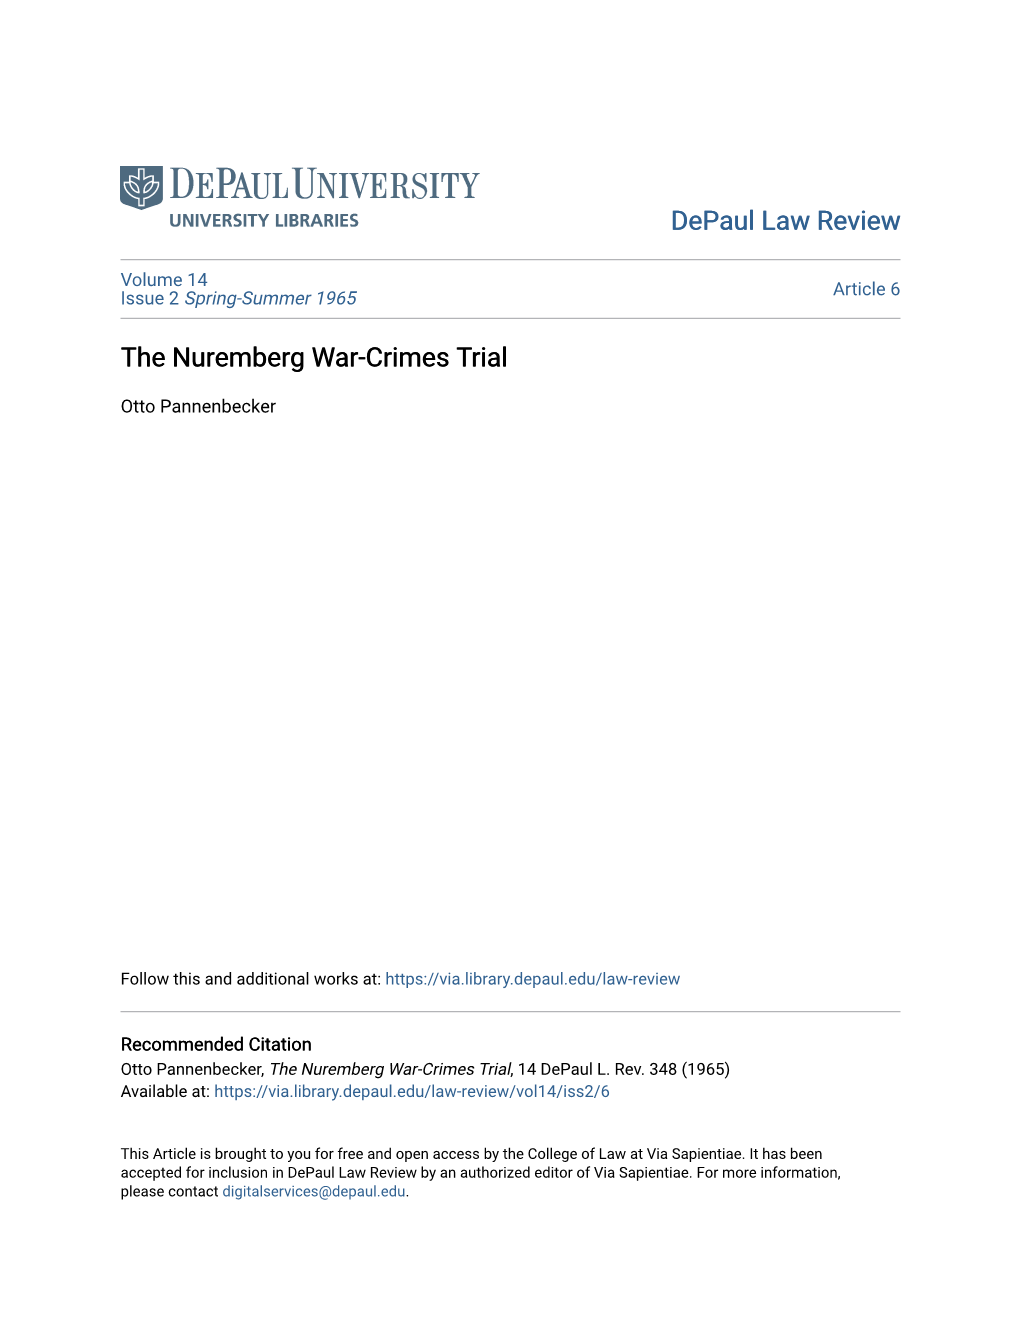 The Nuremberg War-Crimes Trial